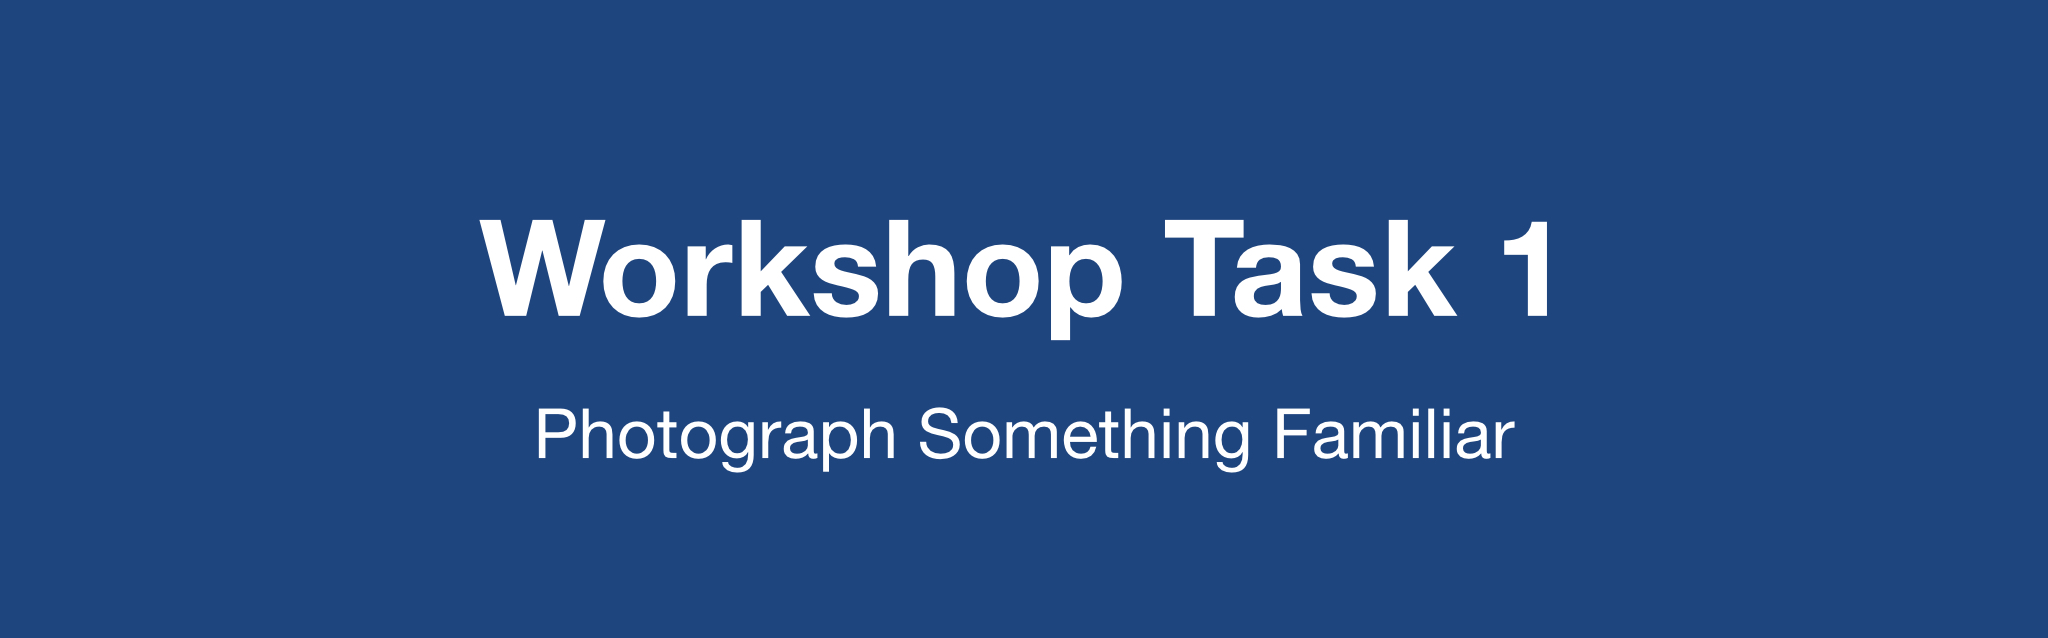 Workshop Task 1: Photography Something Familiar